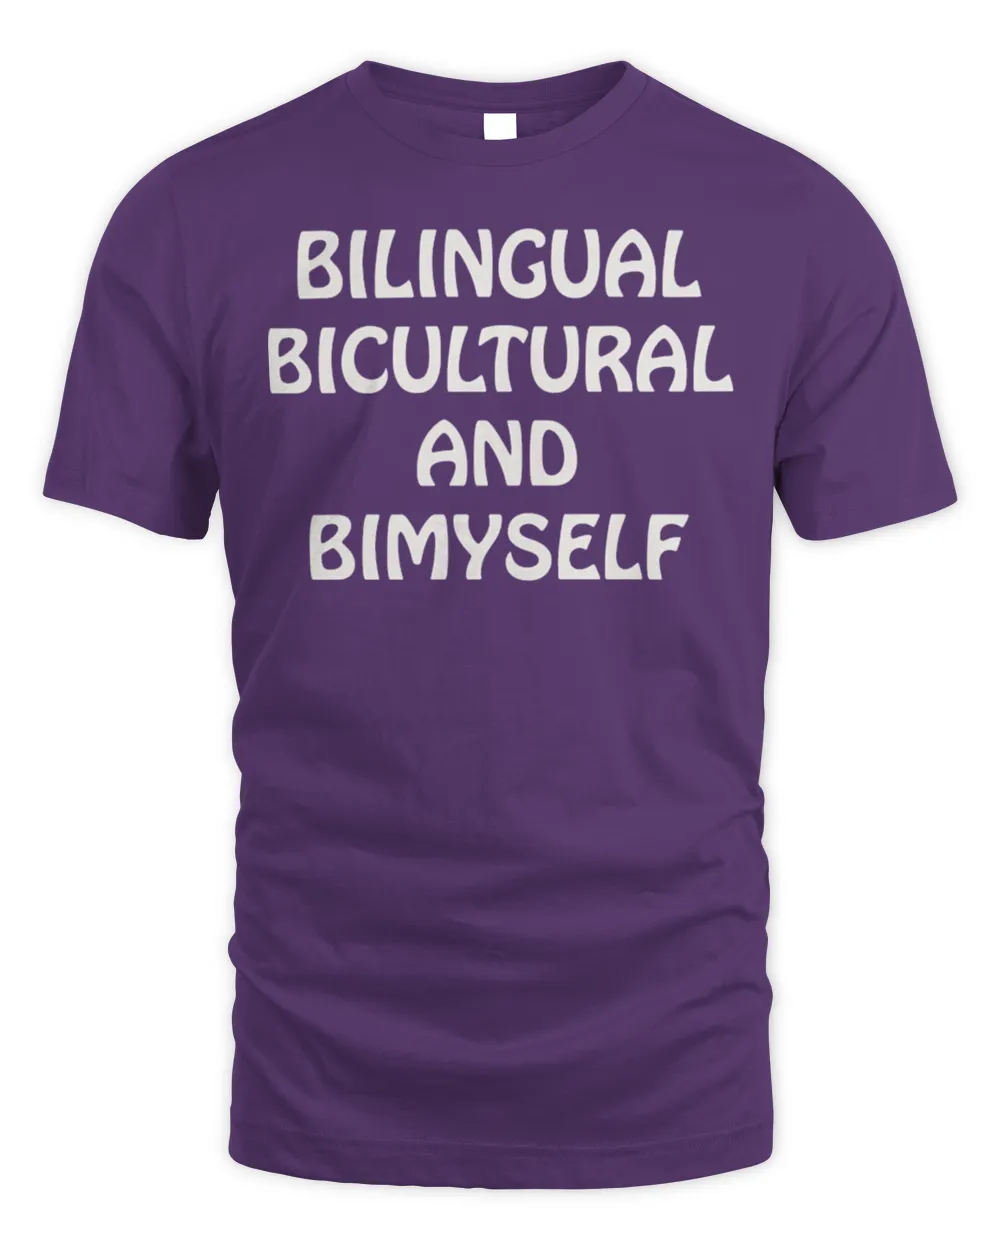 Bilingual bicultural and bimyself Tee shirt